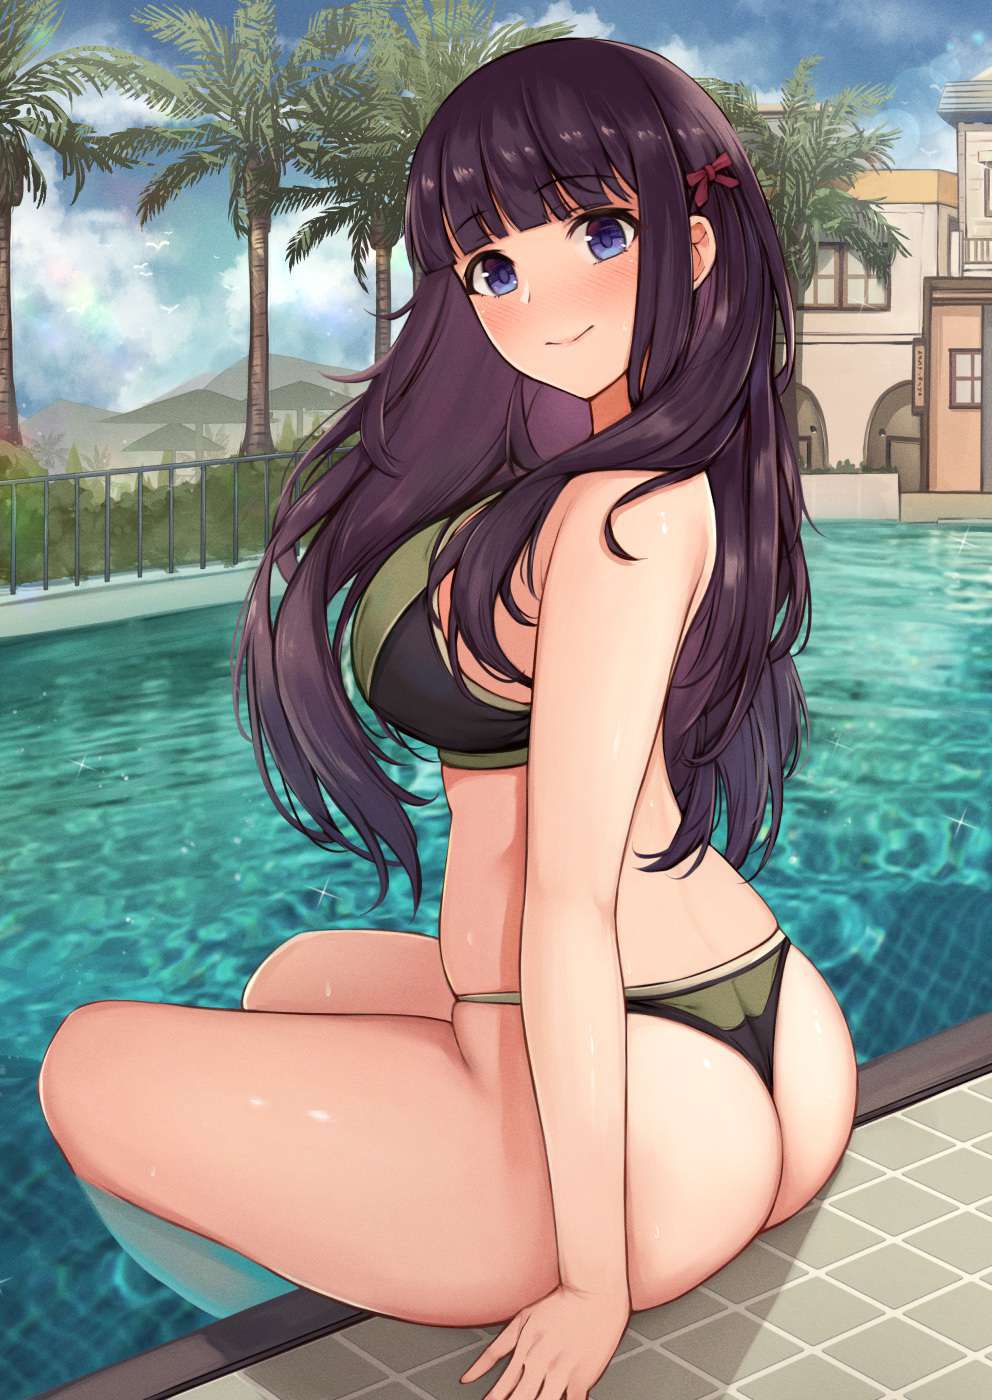 [Precone R] Kasumi's erotic image [Princess Connect! ] Re:Dive】 5